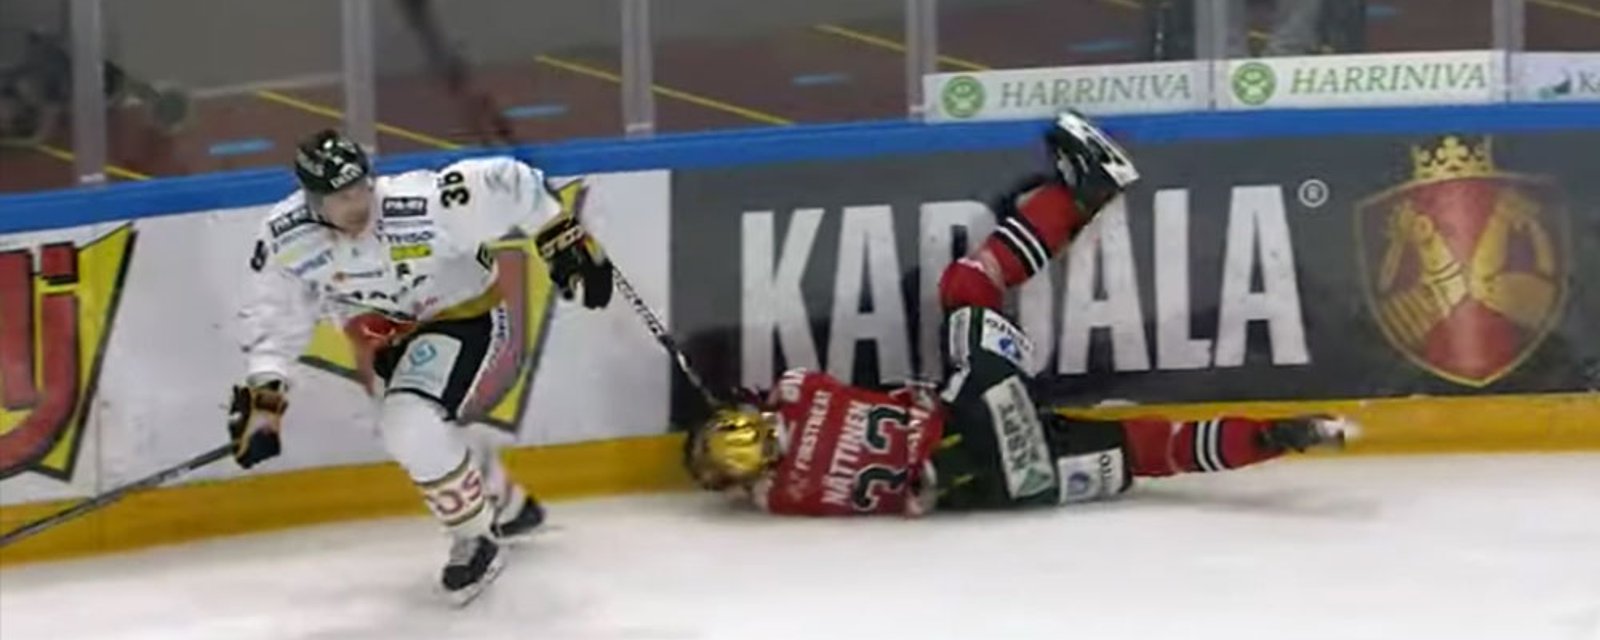 Former NHLer Jokinen given historic suspension in Finnish league